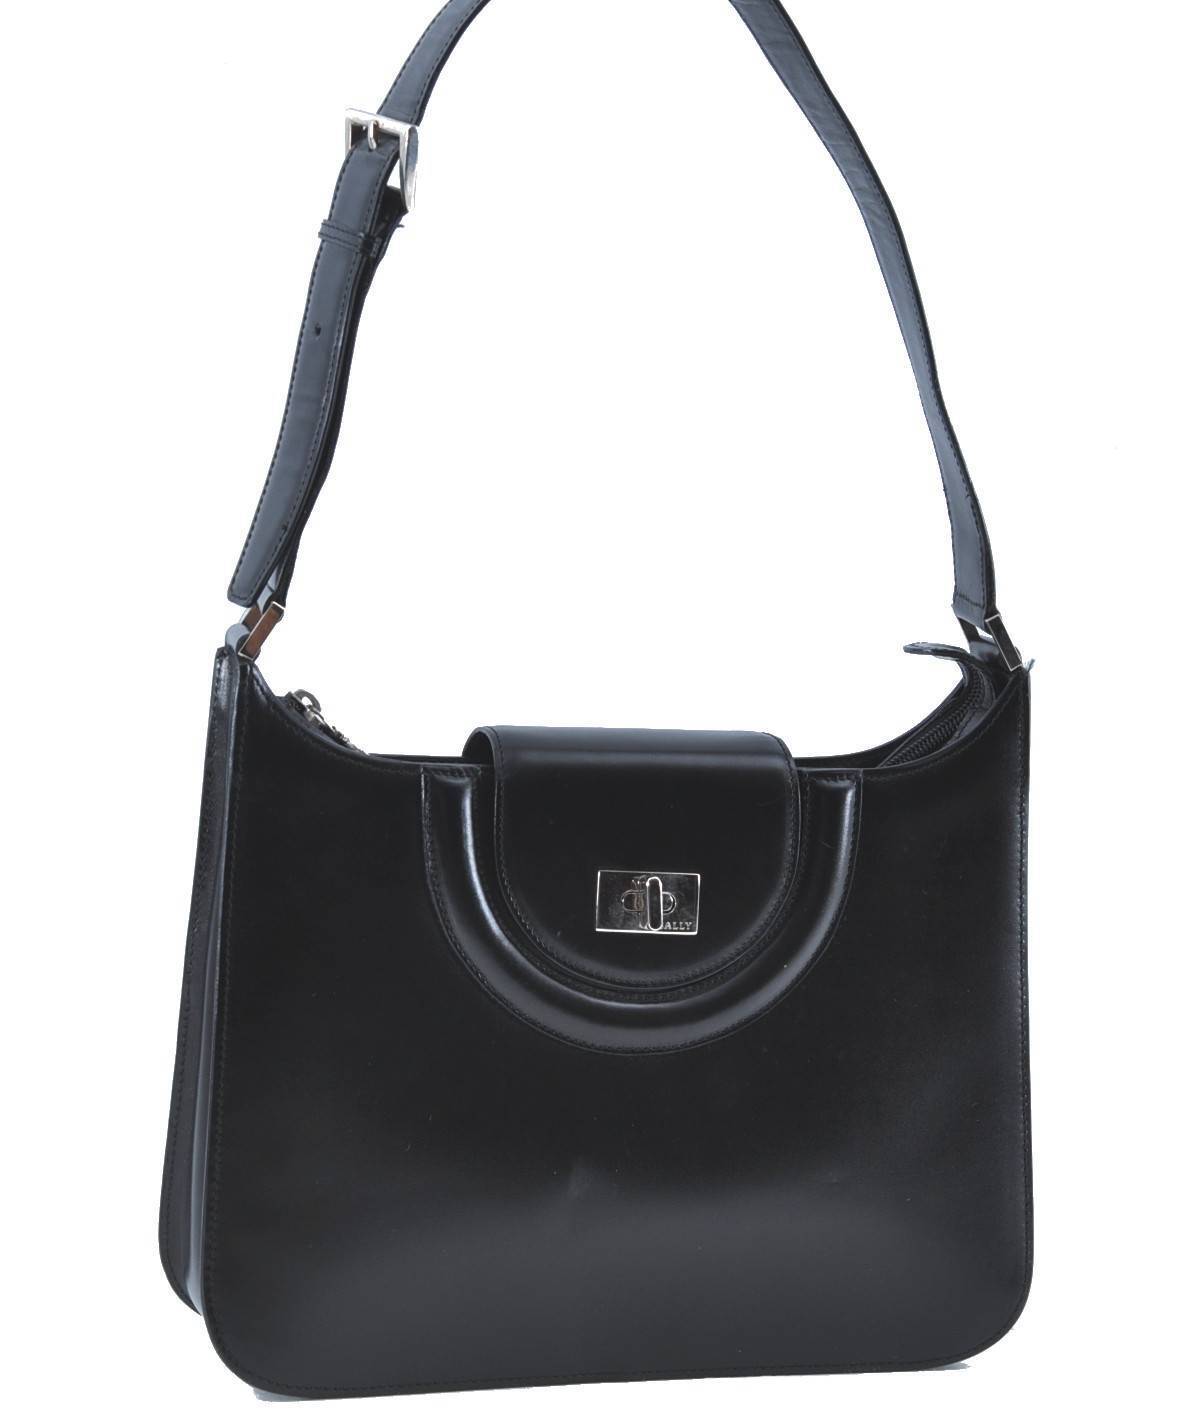 Authentic BALLY Leather Shoulde Bag Purse Black H5916